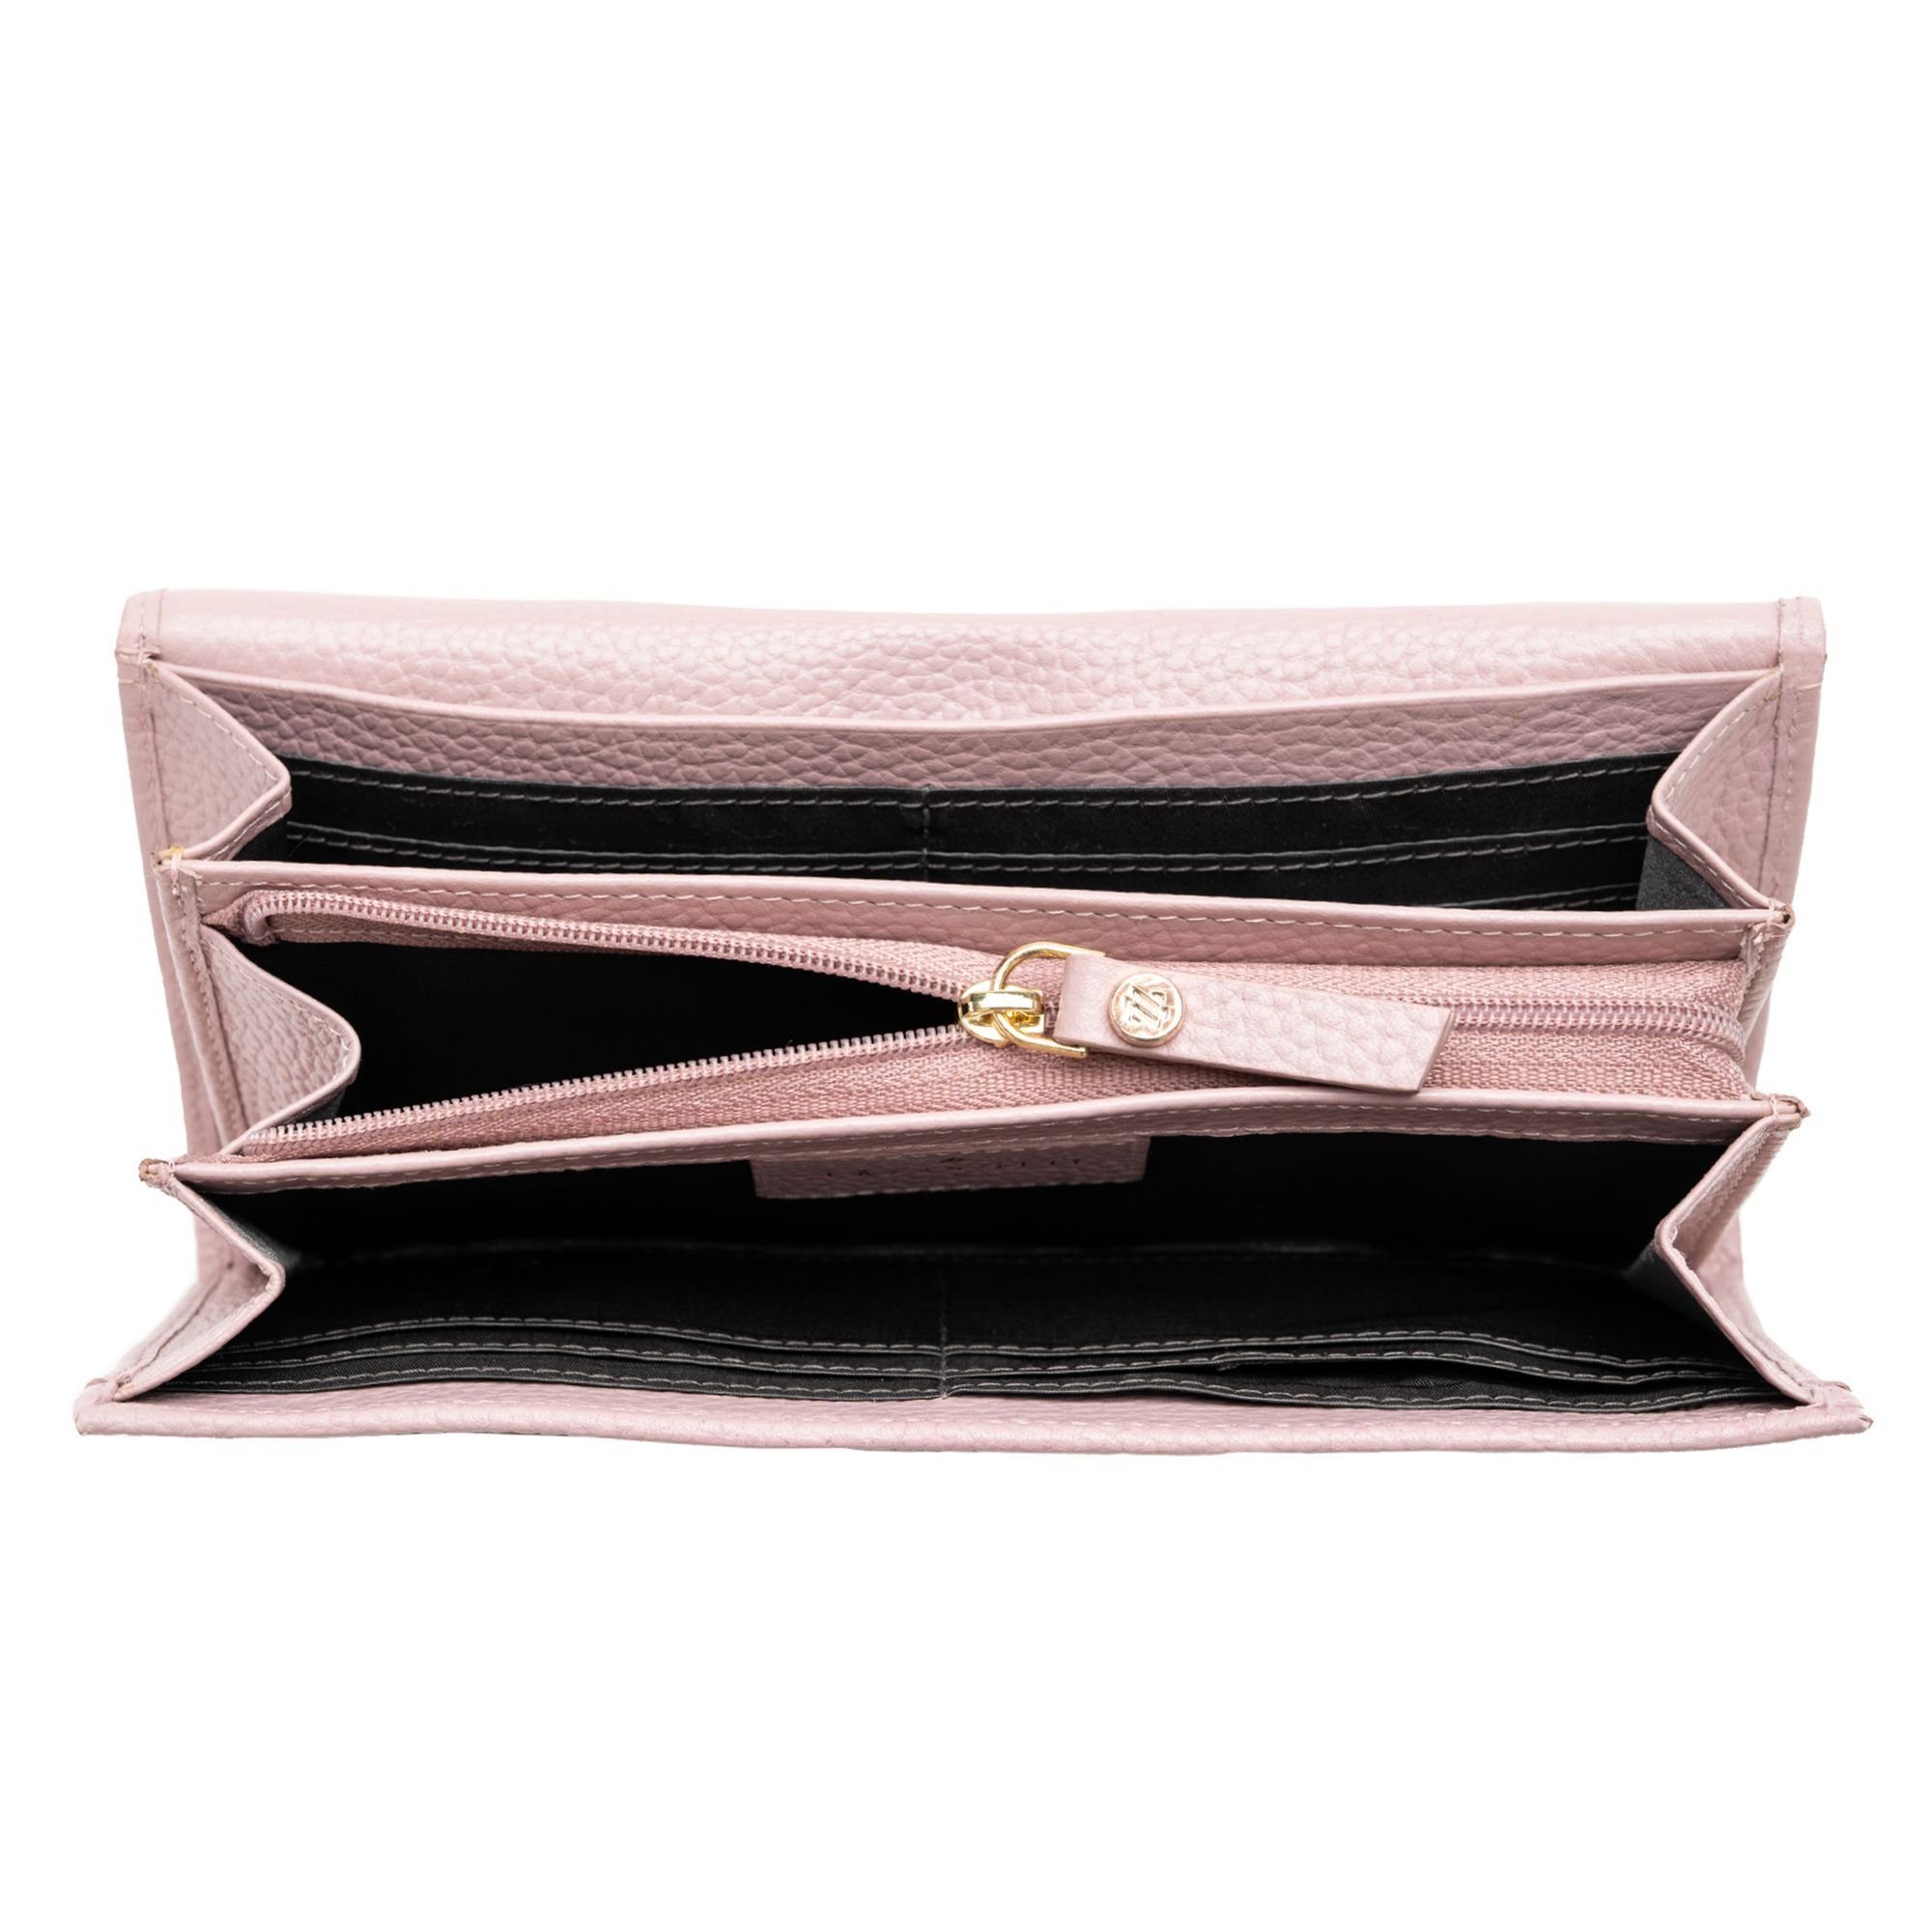 Geldbörse Leder Leather, pink Bologna Lazarotti